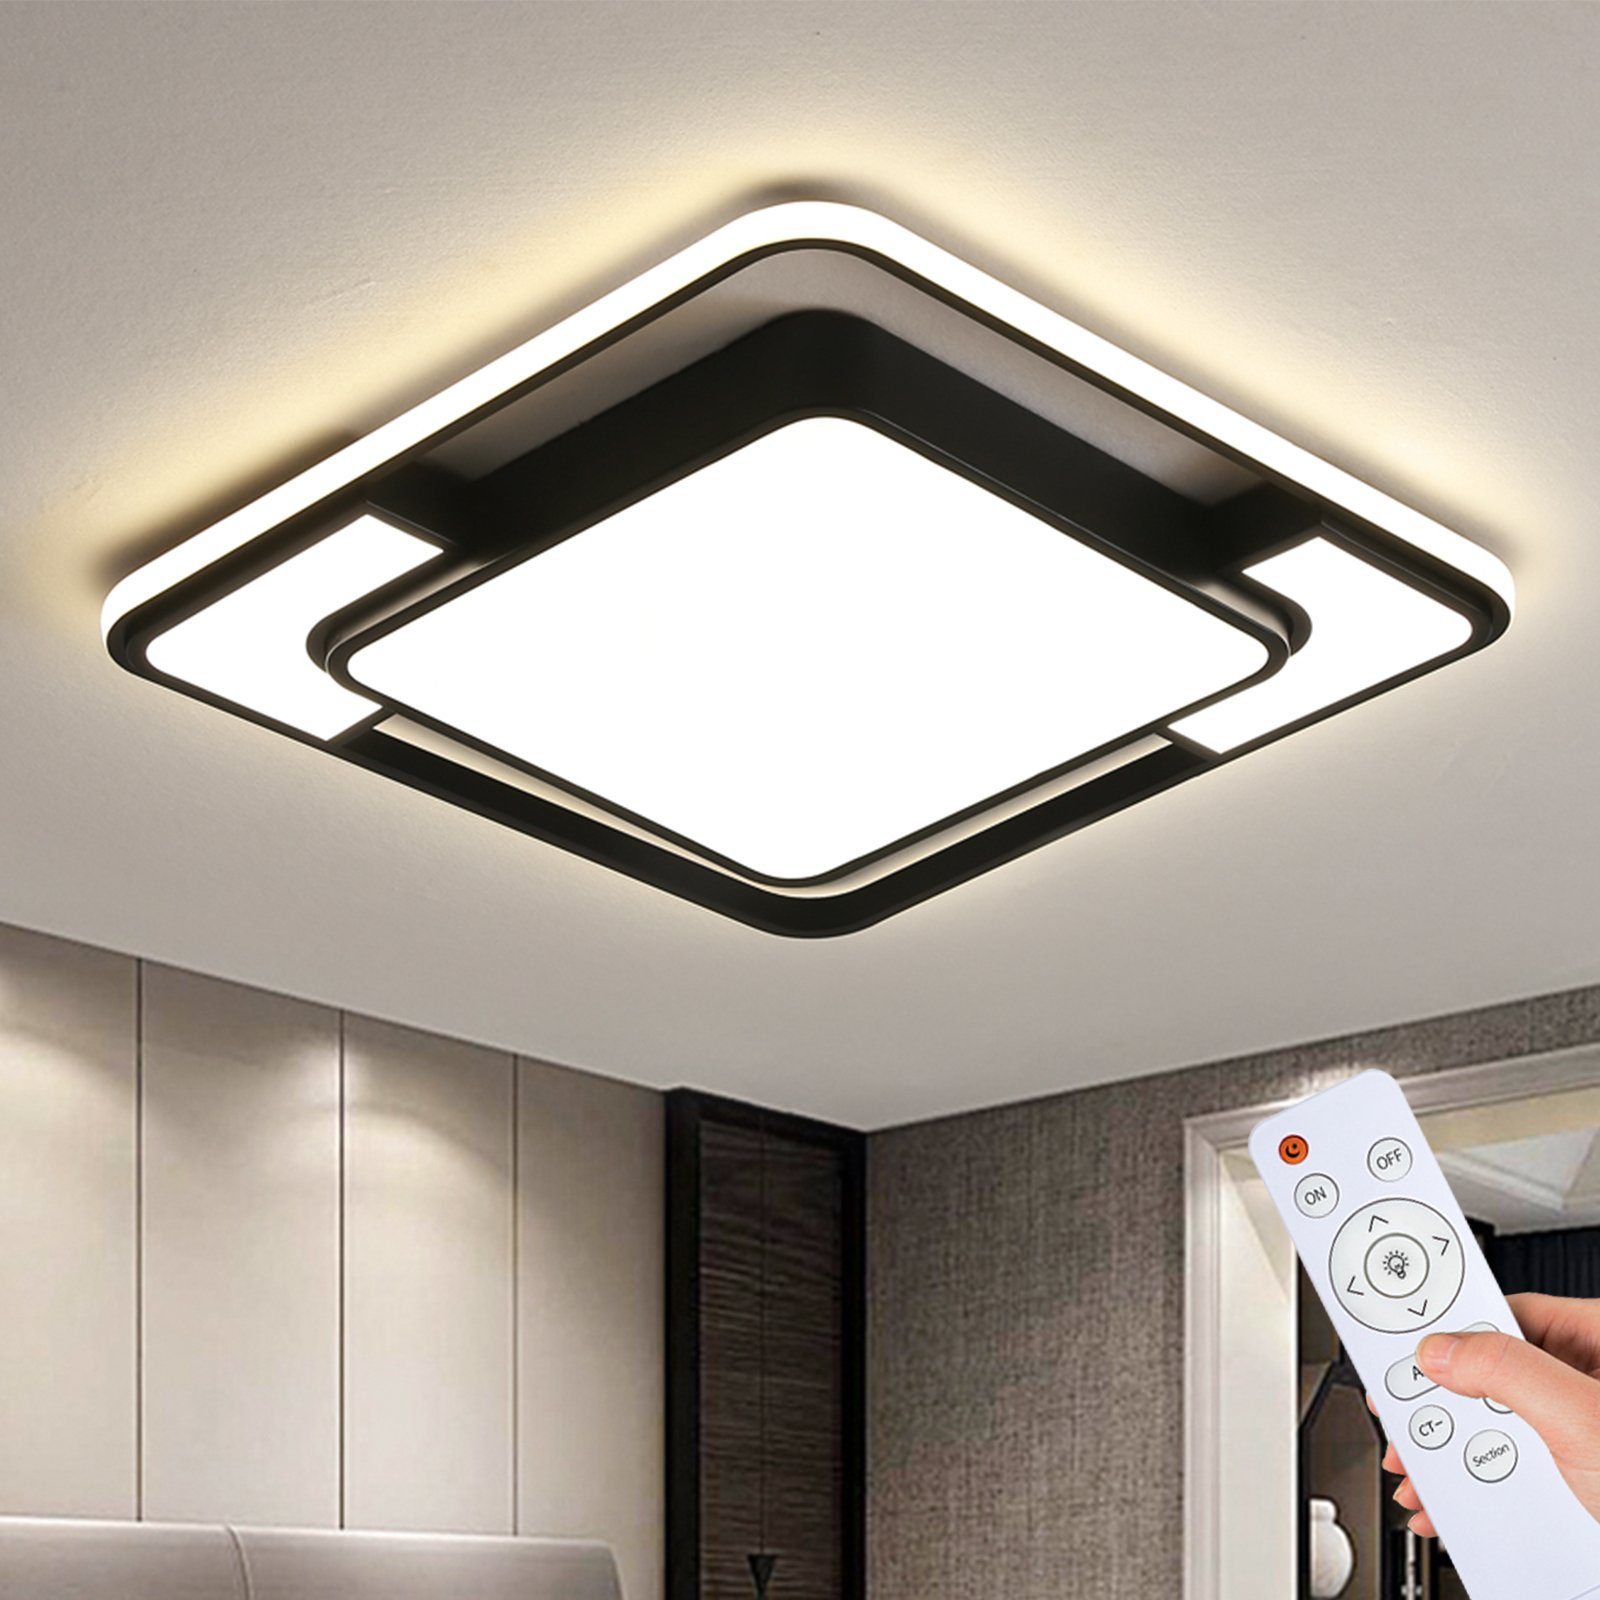 Chrom Decken LED Design Lampe Leuchte Beleuchtung Küche Flur Büro Schlaf Zimmer 